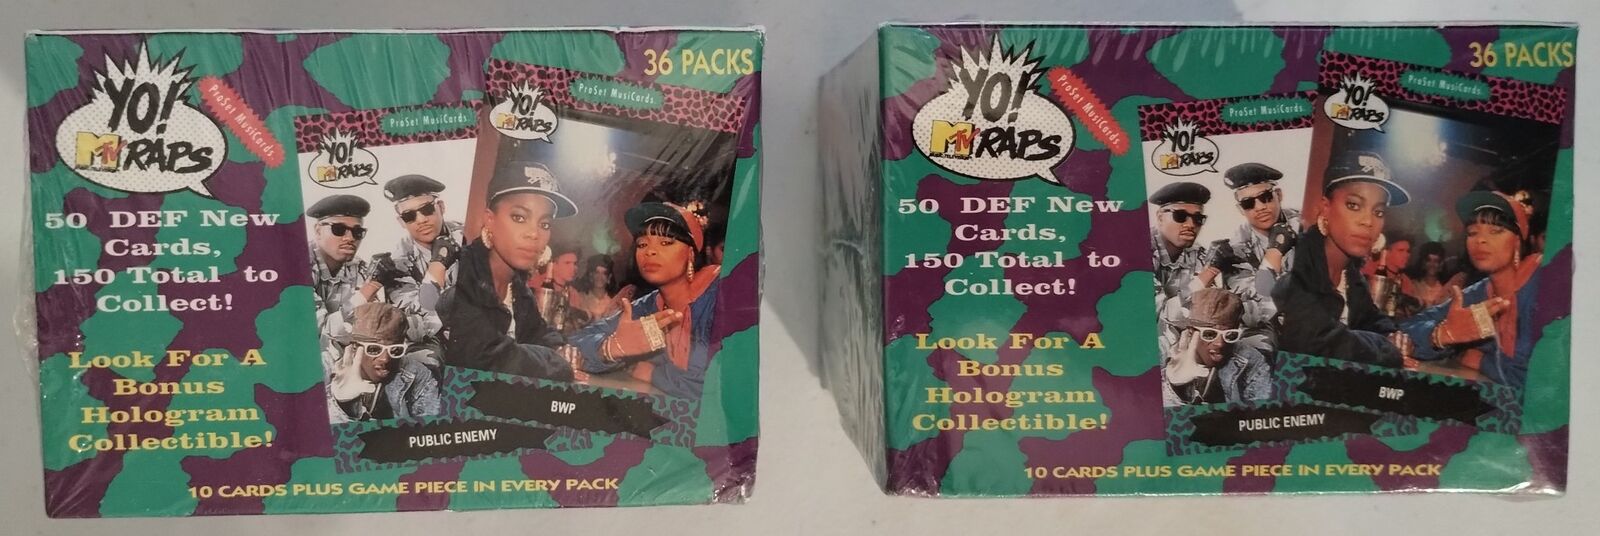 (2) 1991 PRO SET YO! MTV RAPS SERIES 2 UPDATE BOXES SEALED 36 PACKS PER BOX x2 Без бренда - фотография #6